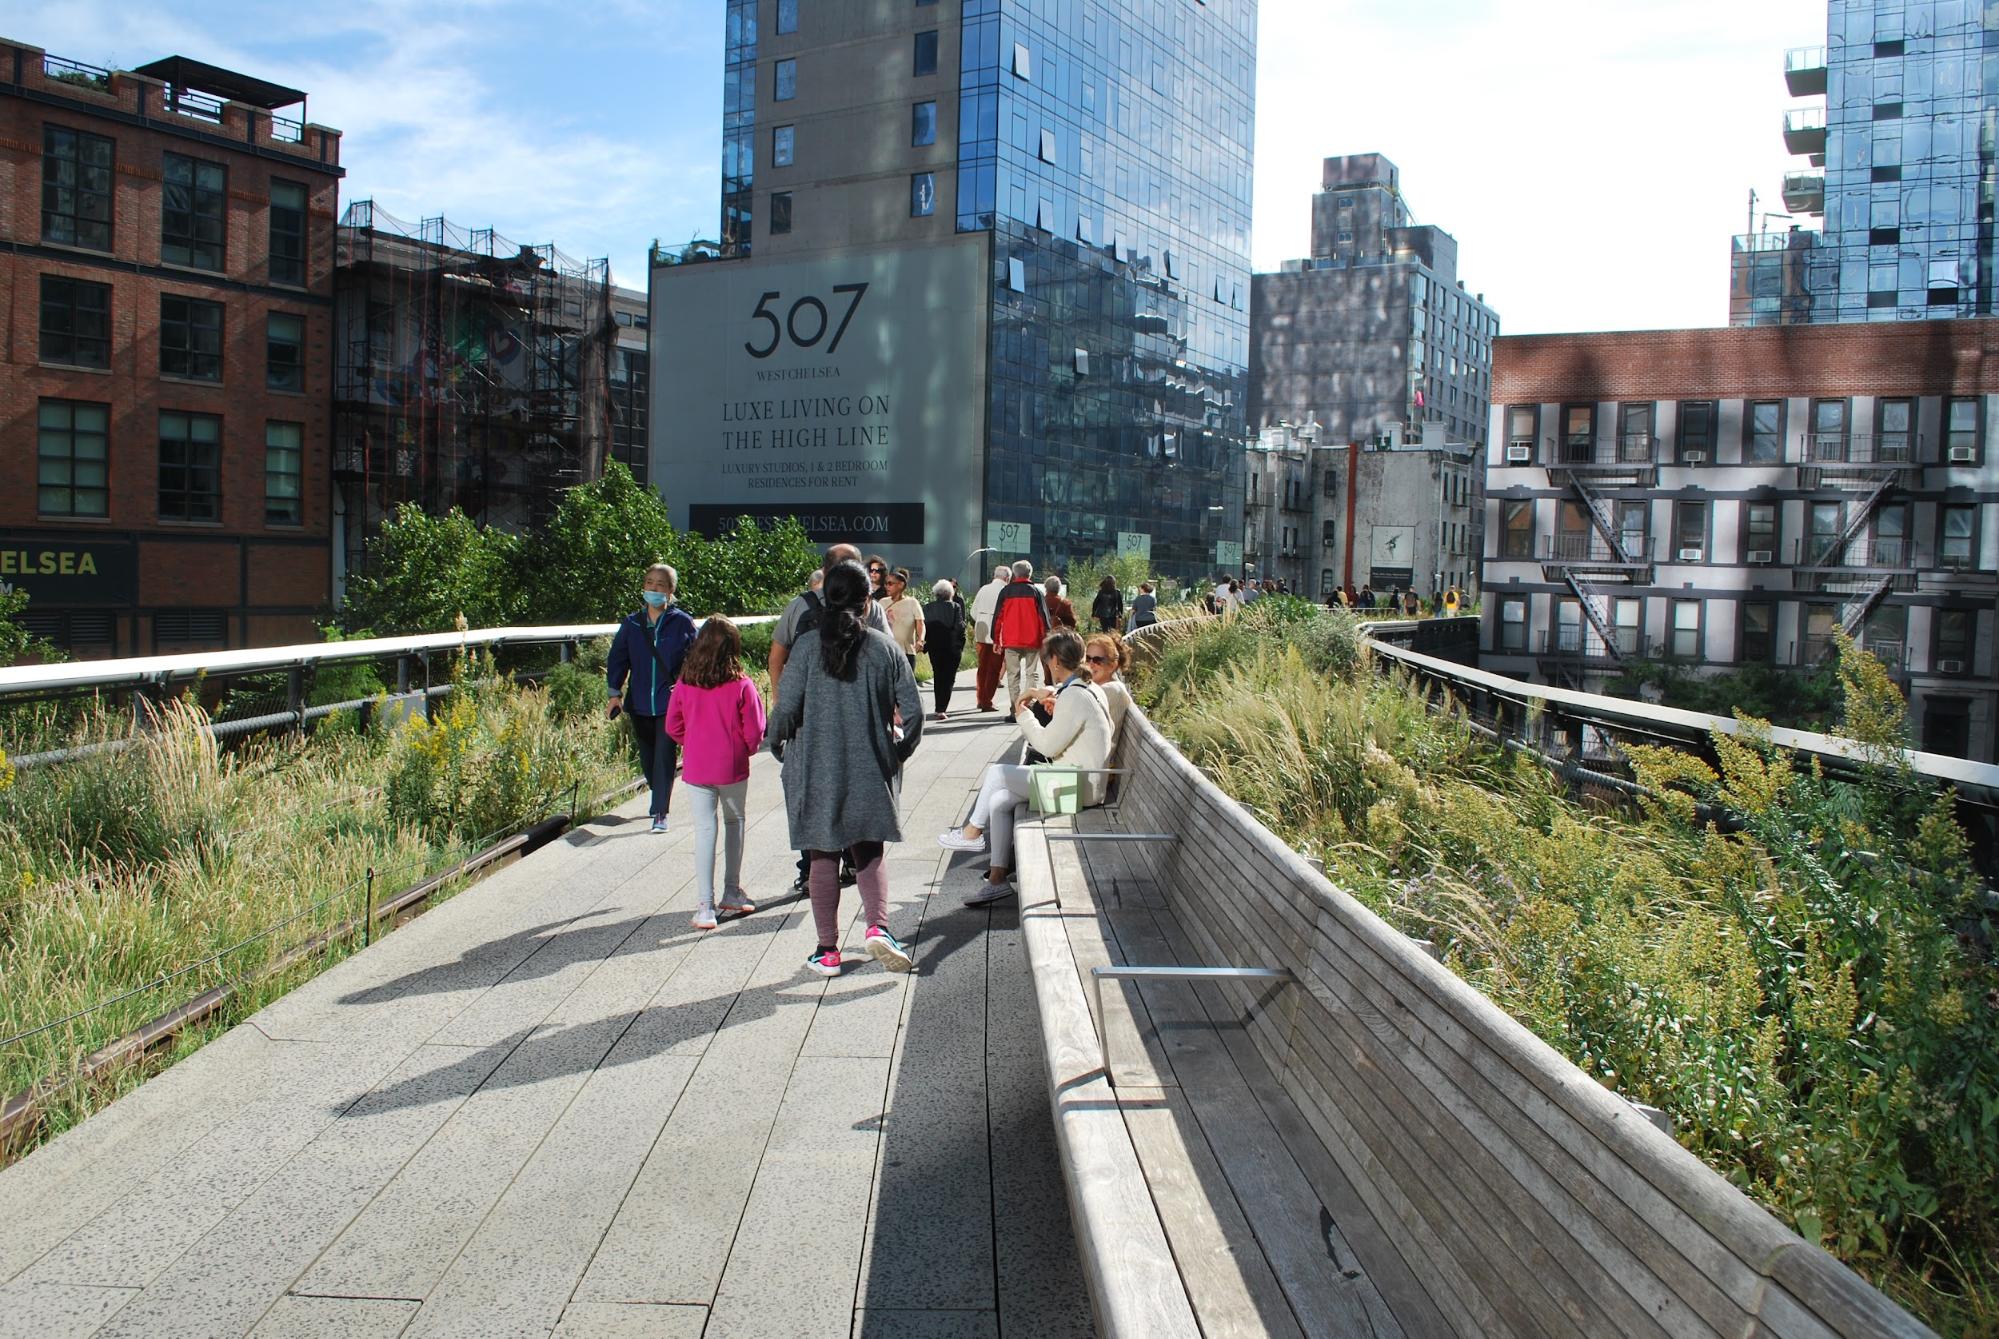 High Line Redux